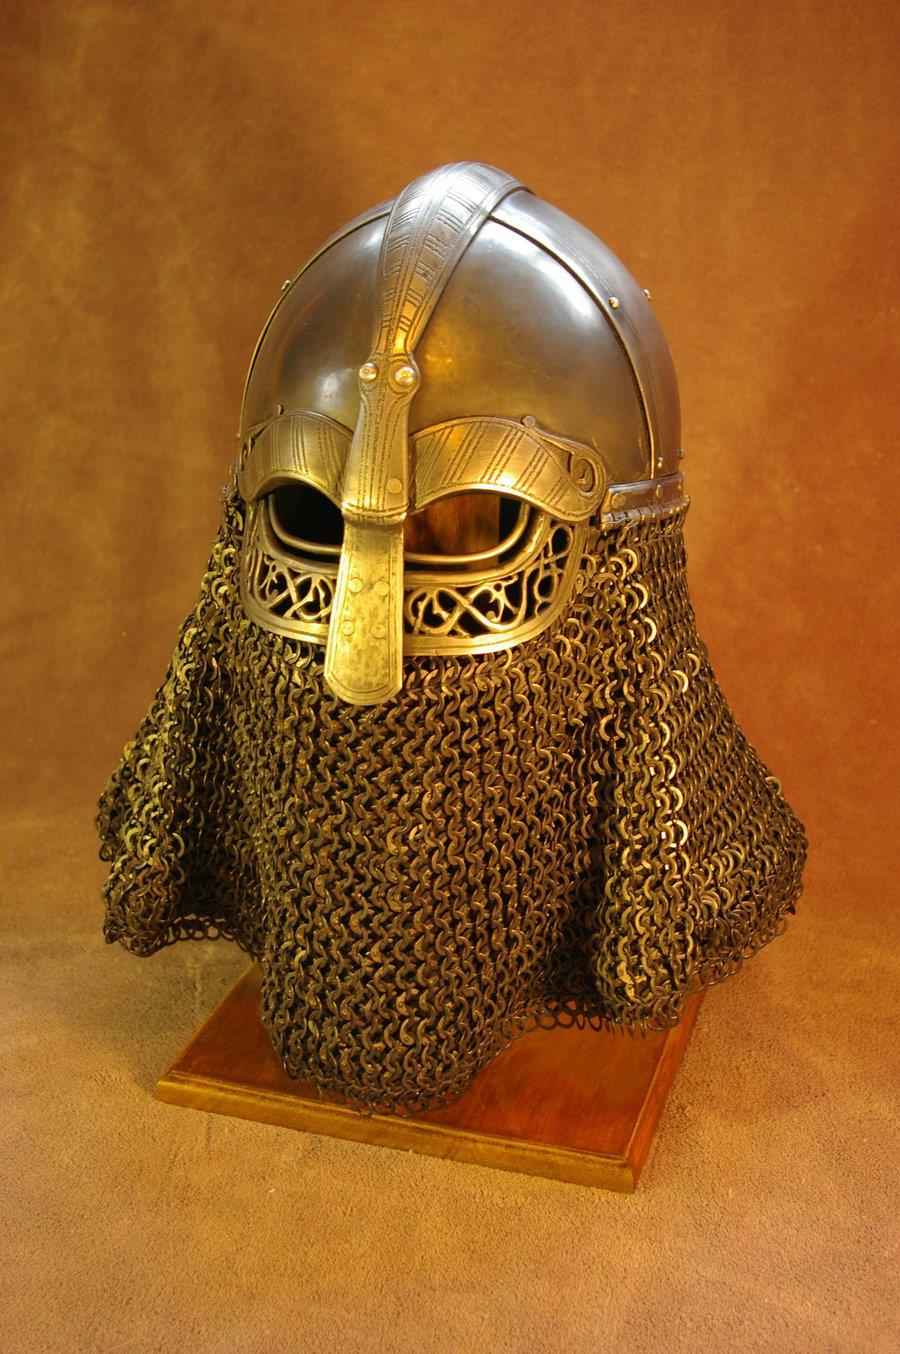 Ramblings of a Great Khan: Viking Equipment and Money